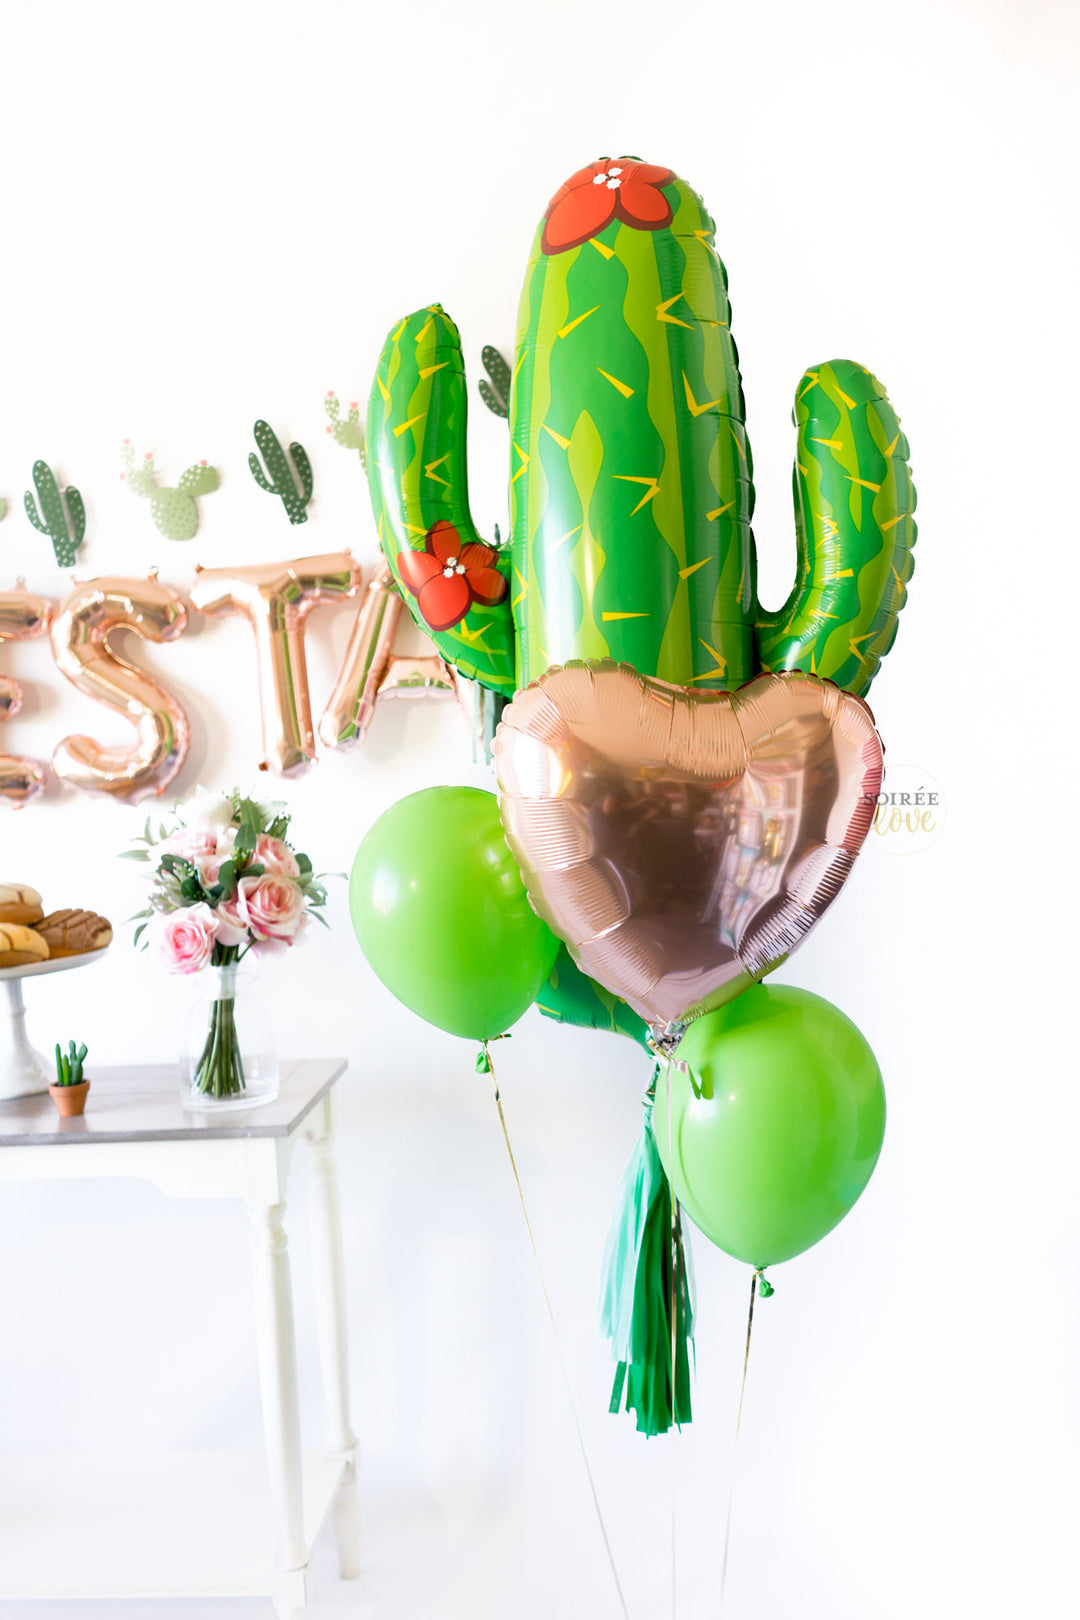 LOVE rose gold foil balloons – The Fiesta Box